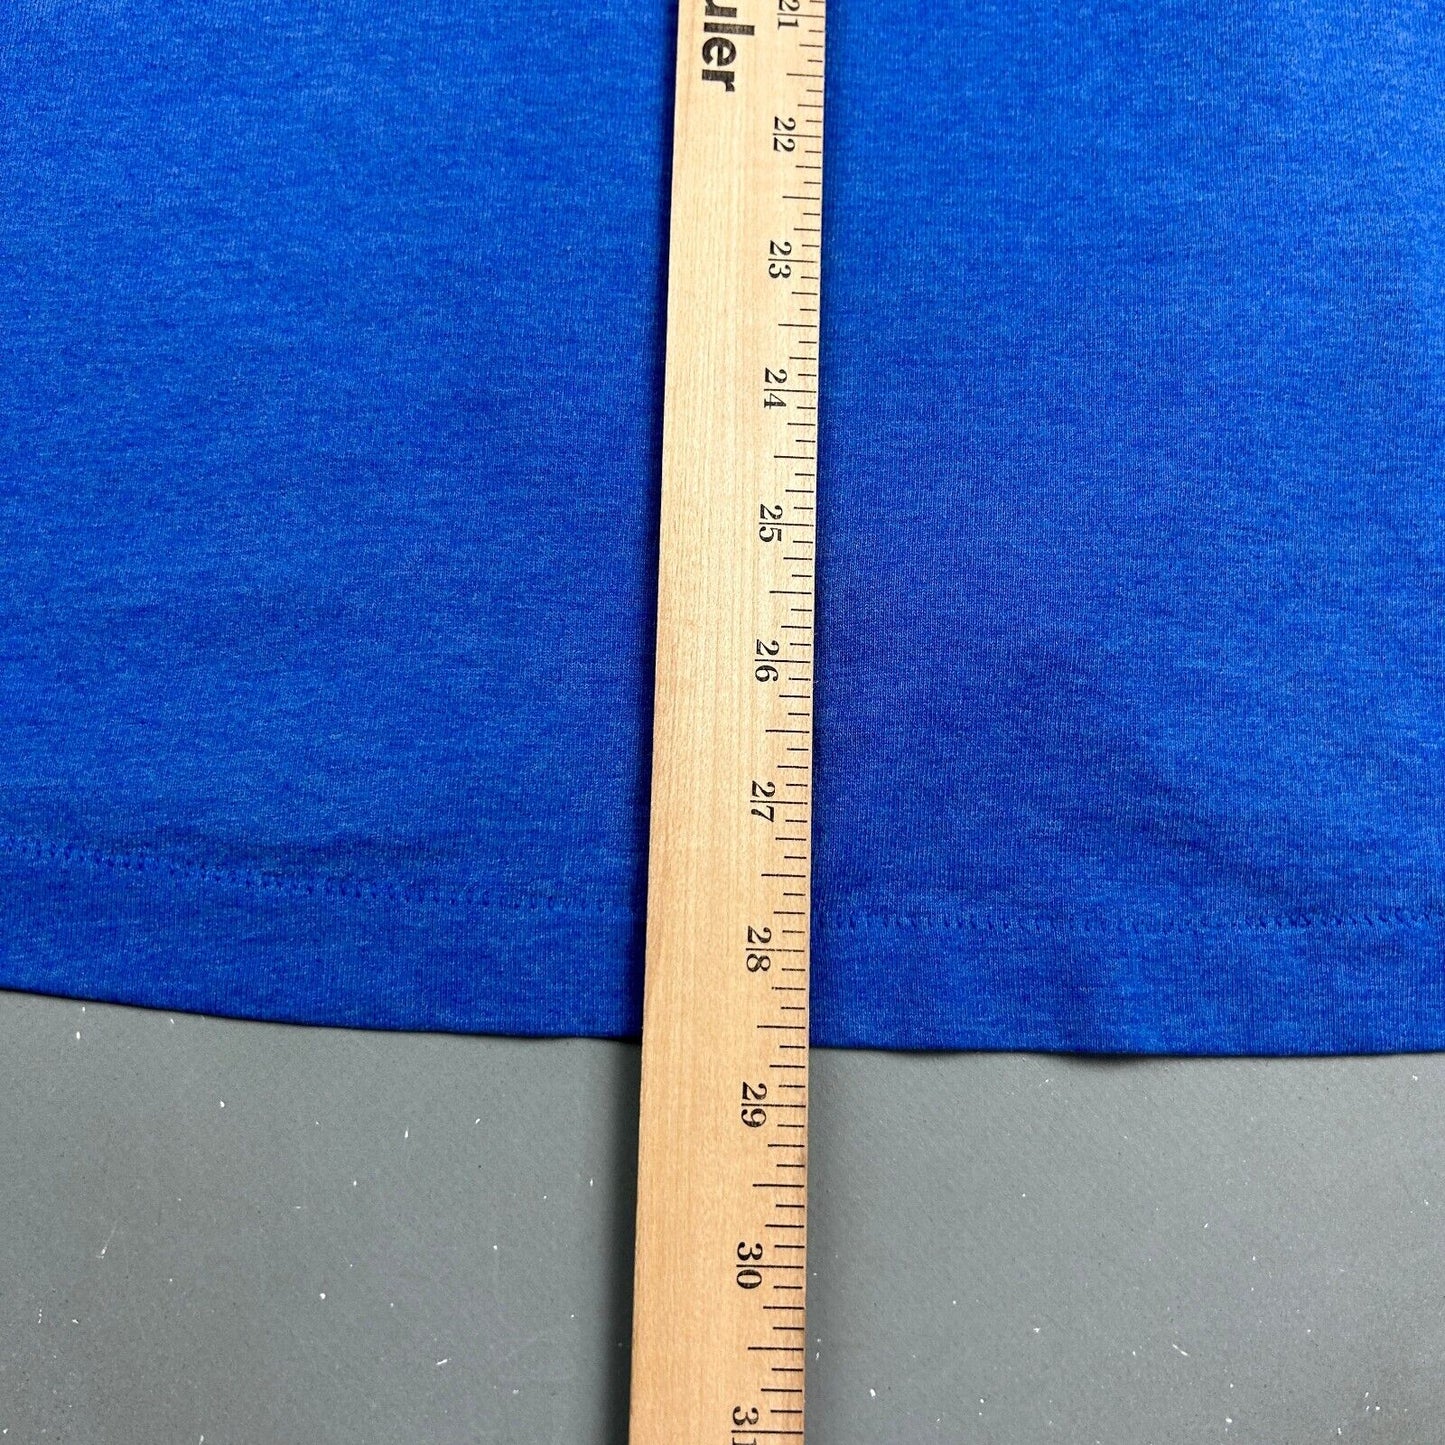 VINTAGE 90s Blank Blue Single Stitch T-Shirt sz Large Adult